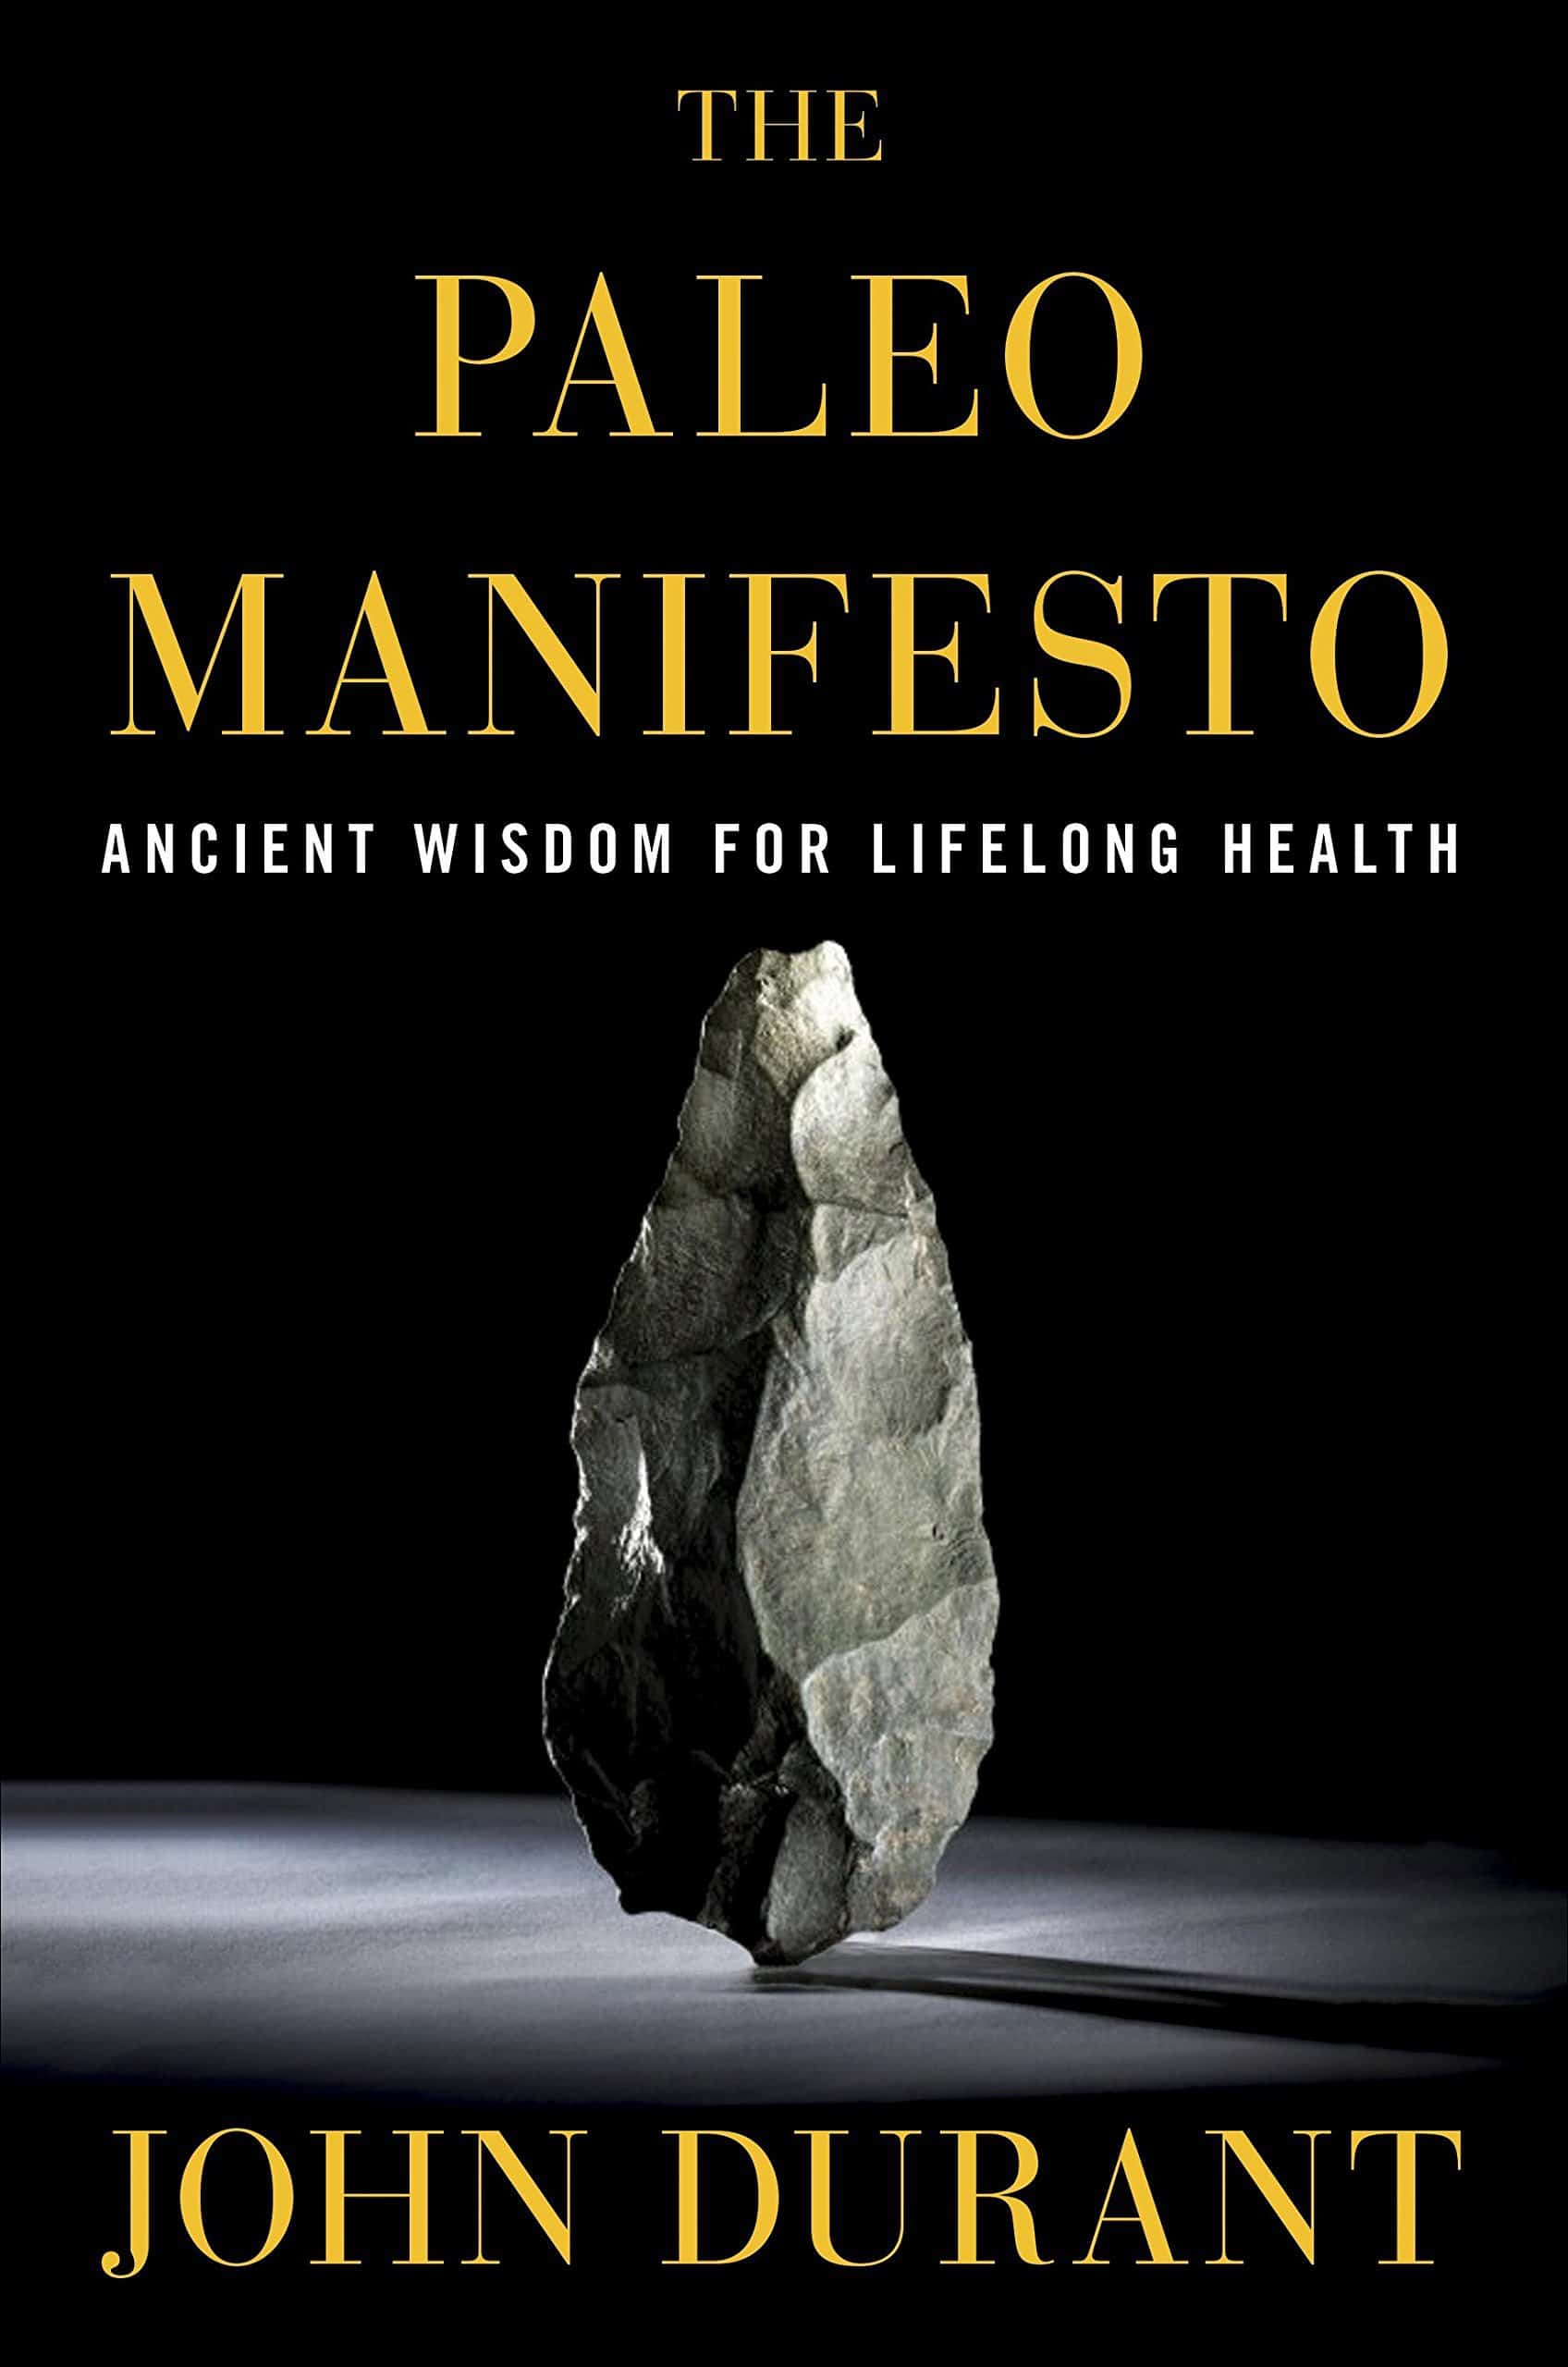 The Paleo Manifesto by John Durant - Personal Development book